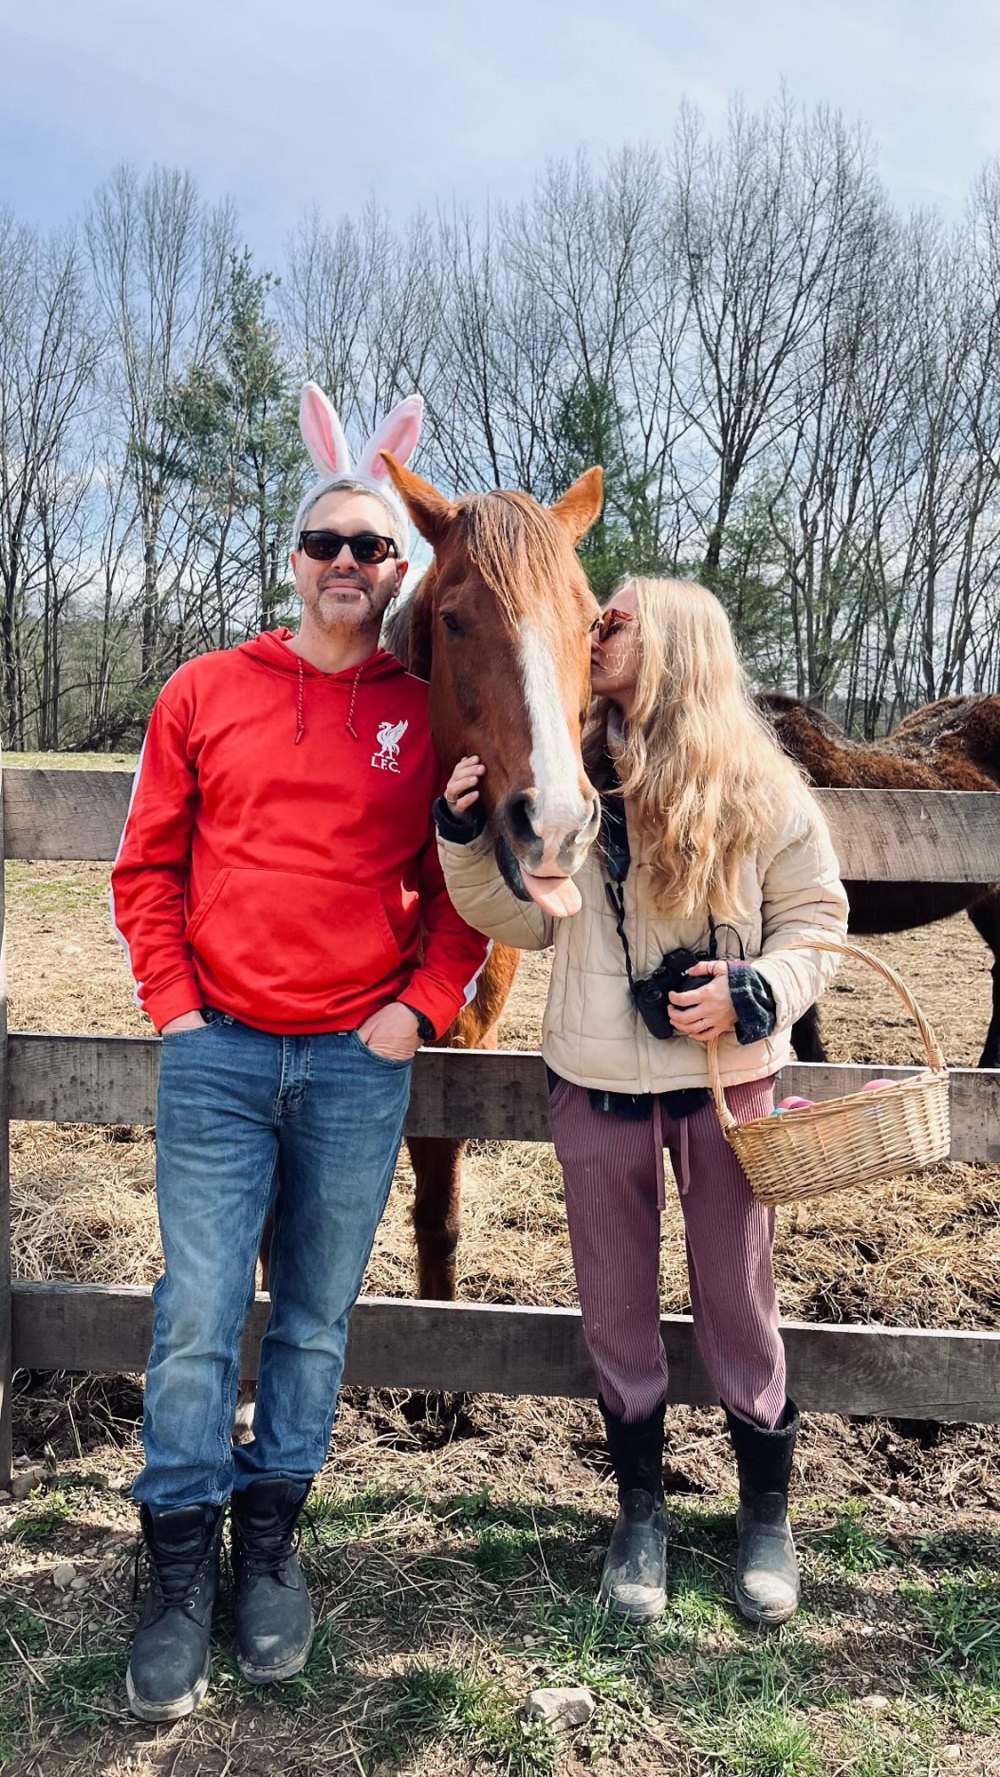 Amanda Seyfried and Husband Thomas Sadoski Celebrate Easter With Their Farm Animals